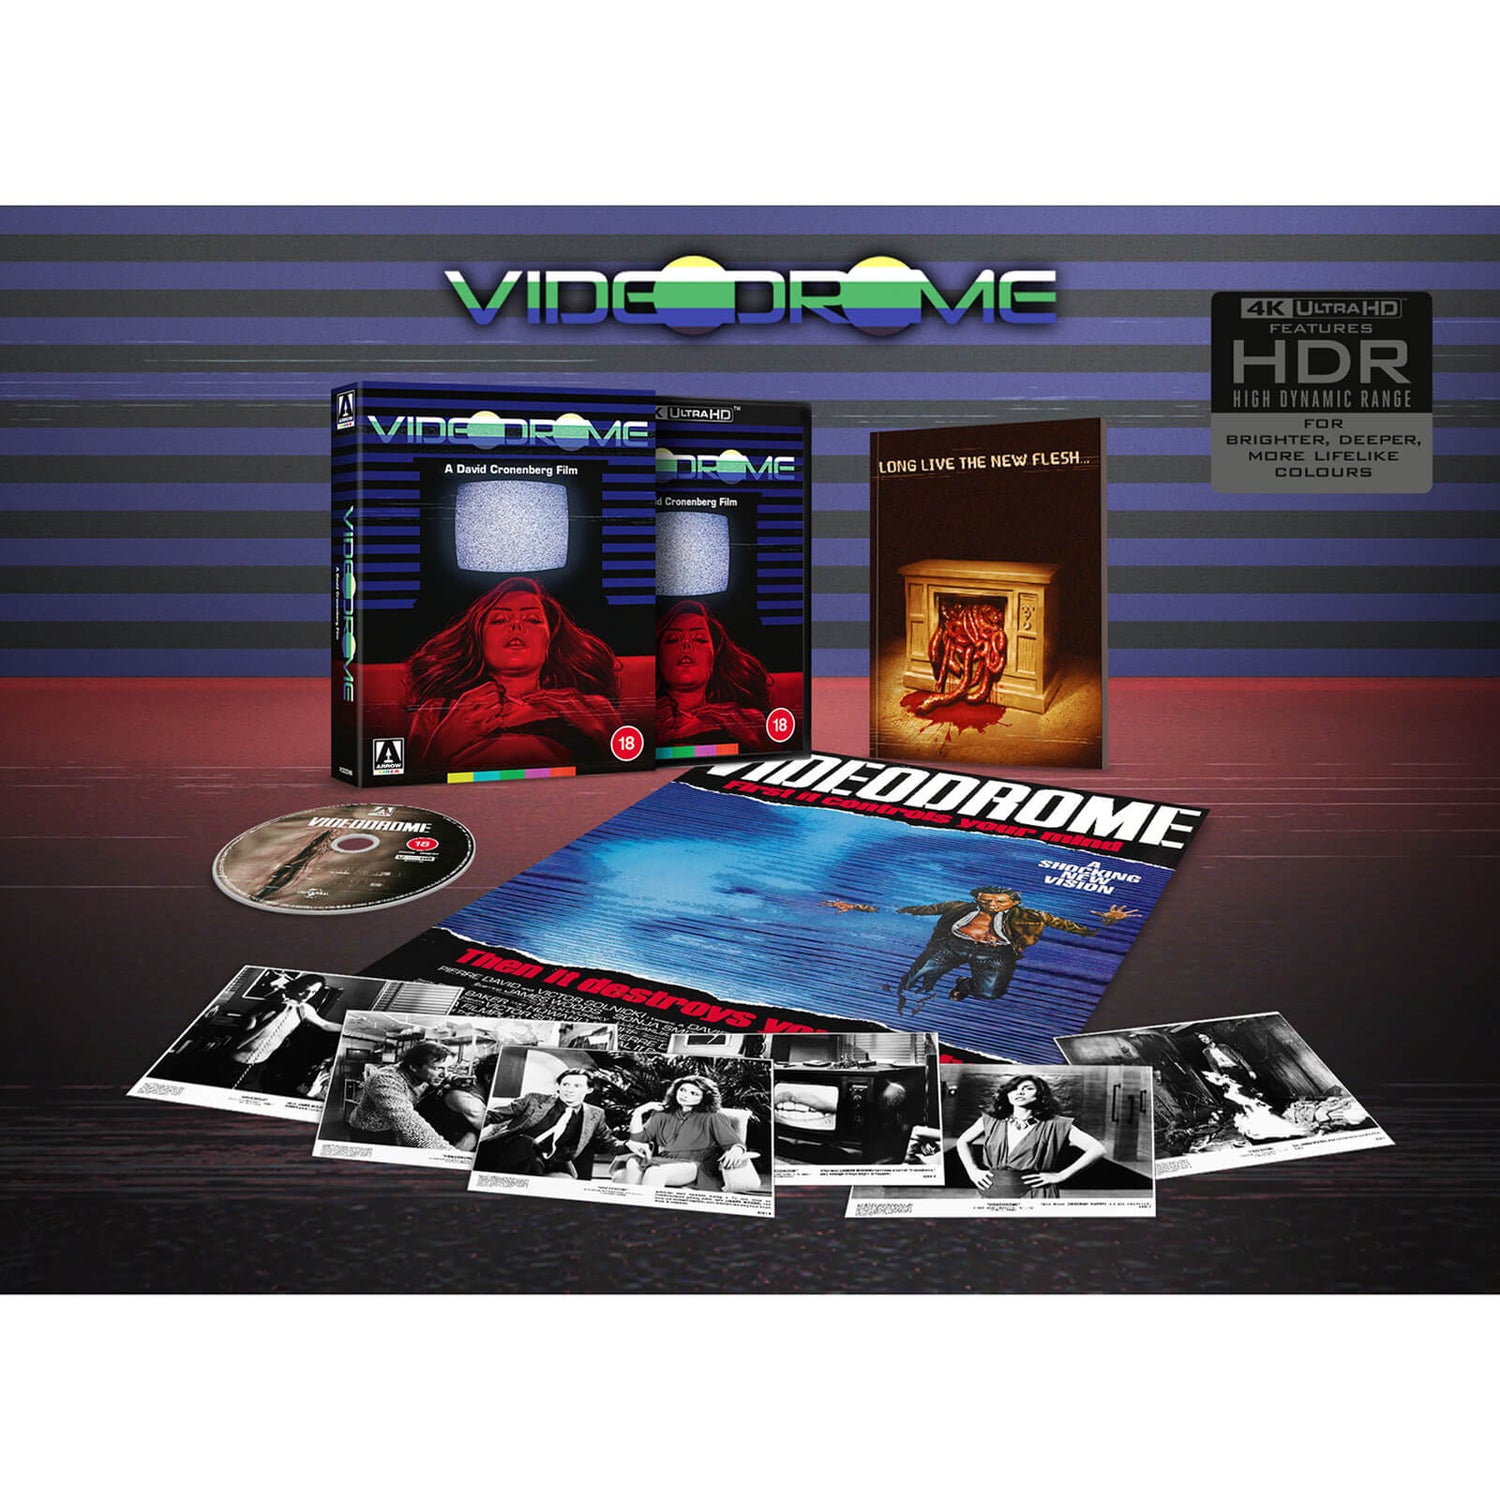 Videodrome Limited Edition 4K Ultra HD 